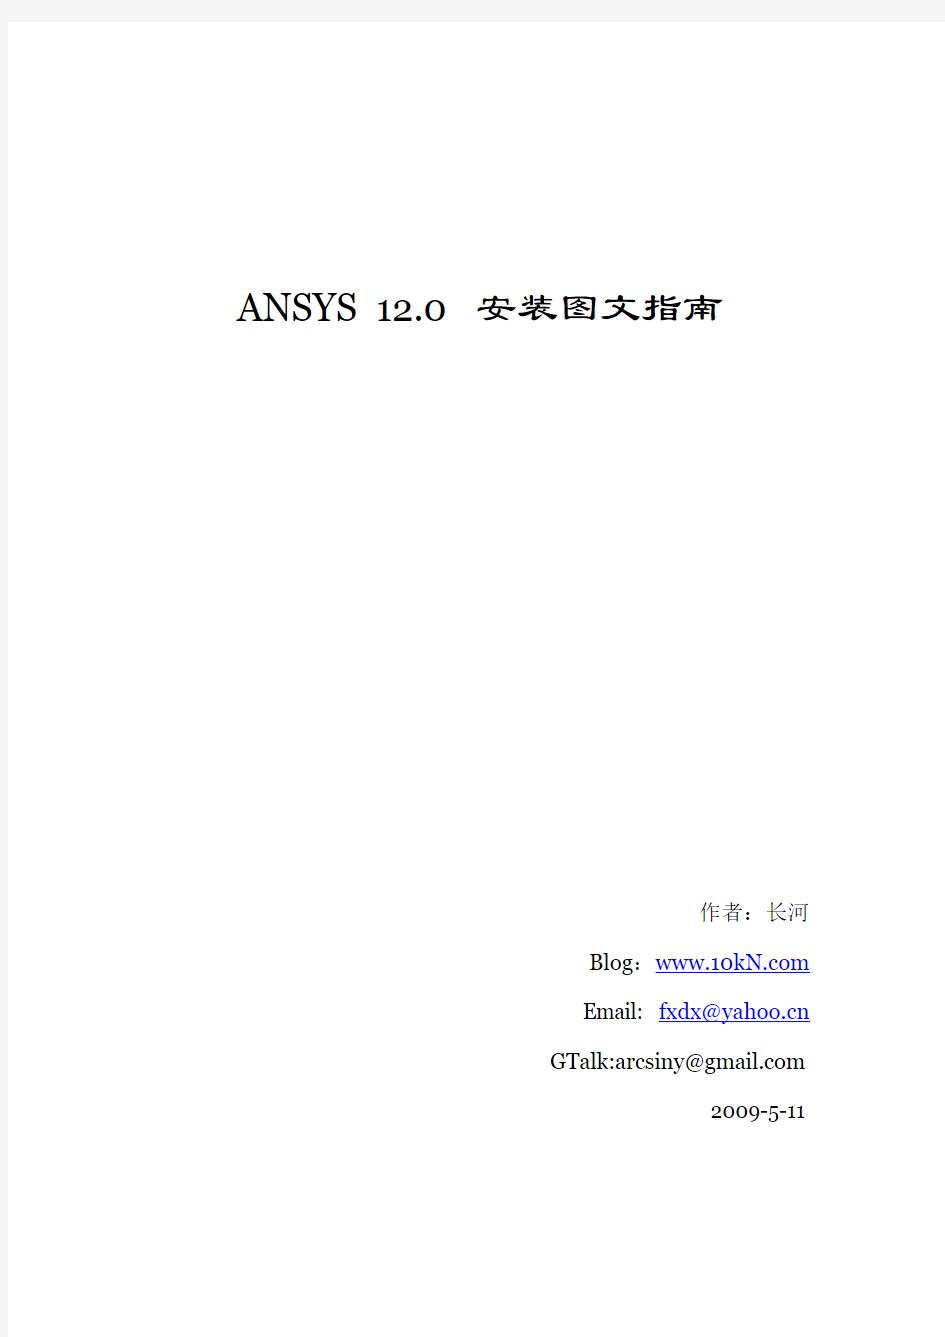 ANSYS12.0安装说明